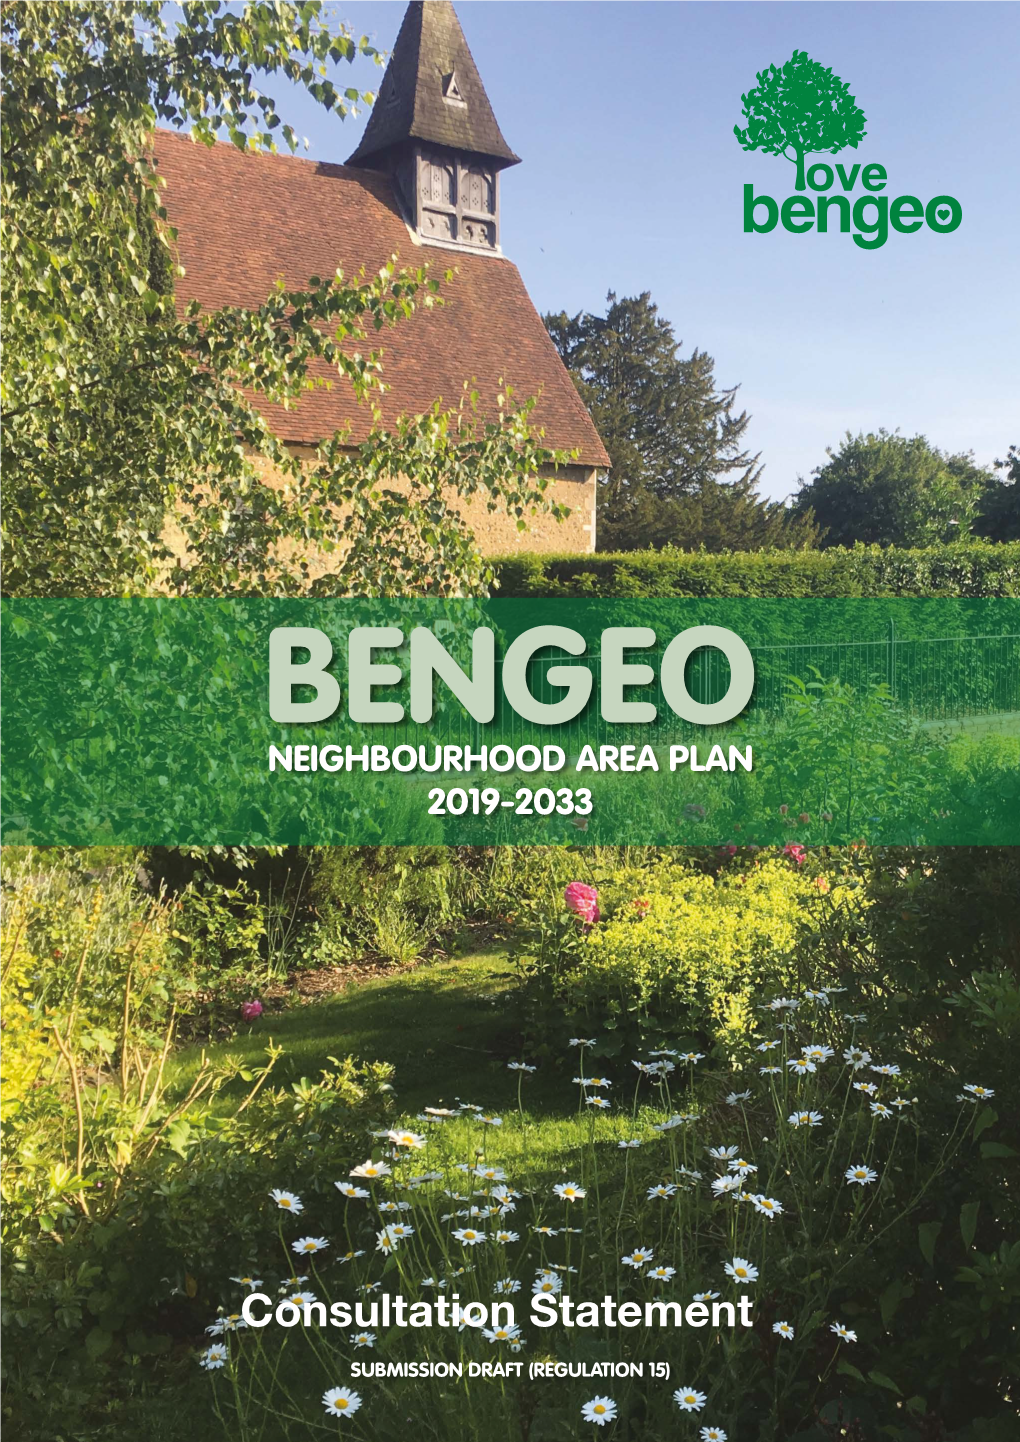 Consultation Statement for the Bengeo Neighbourhood Area Plan